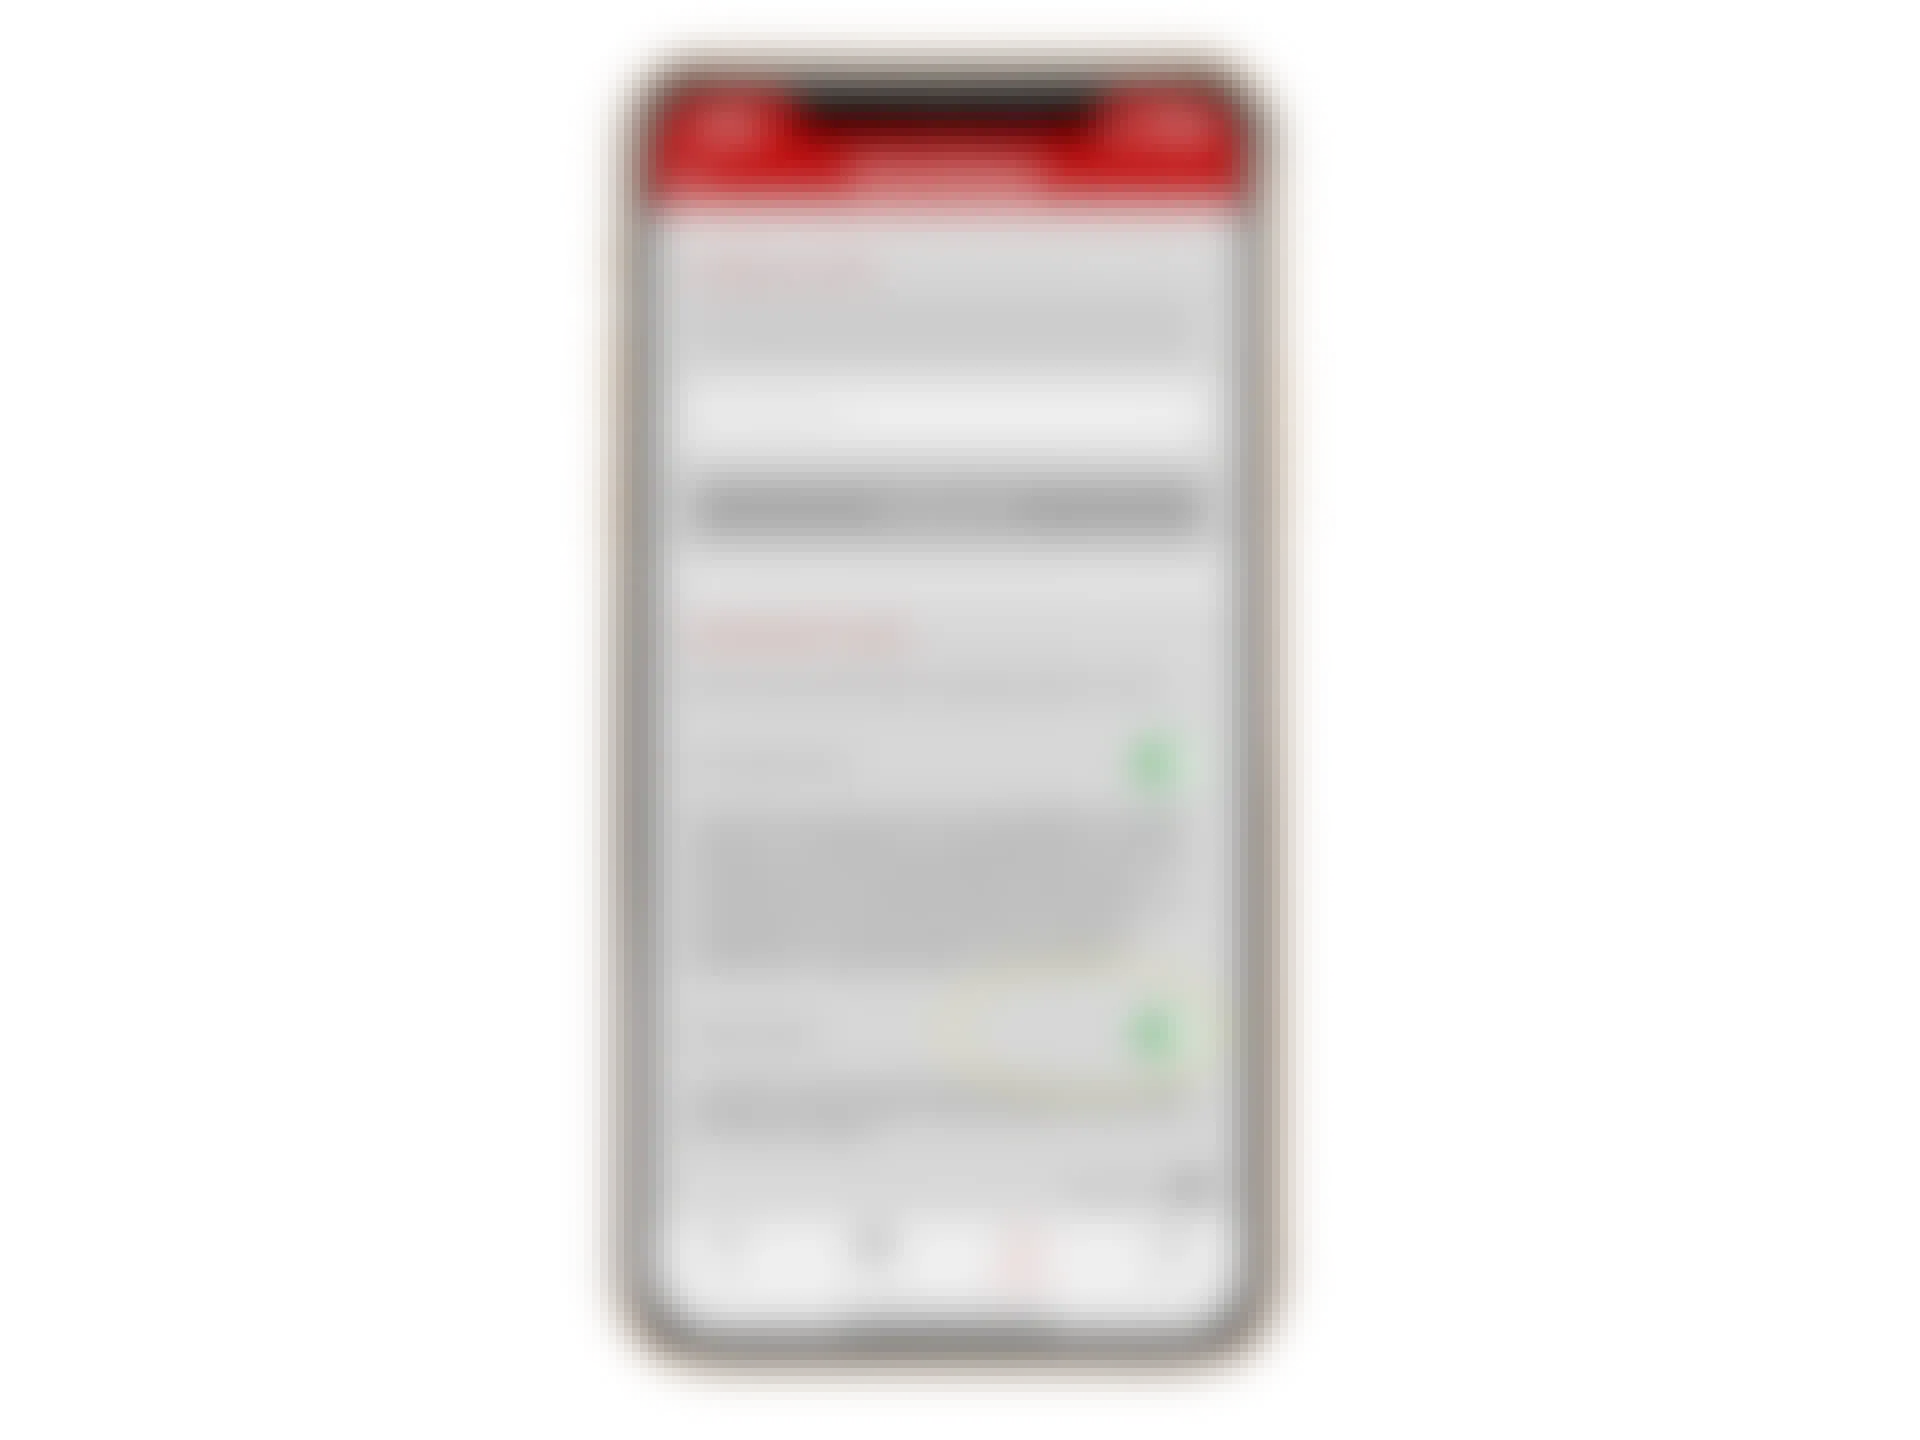 cvs app on iphone shows digital receipts toggl